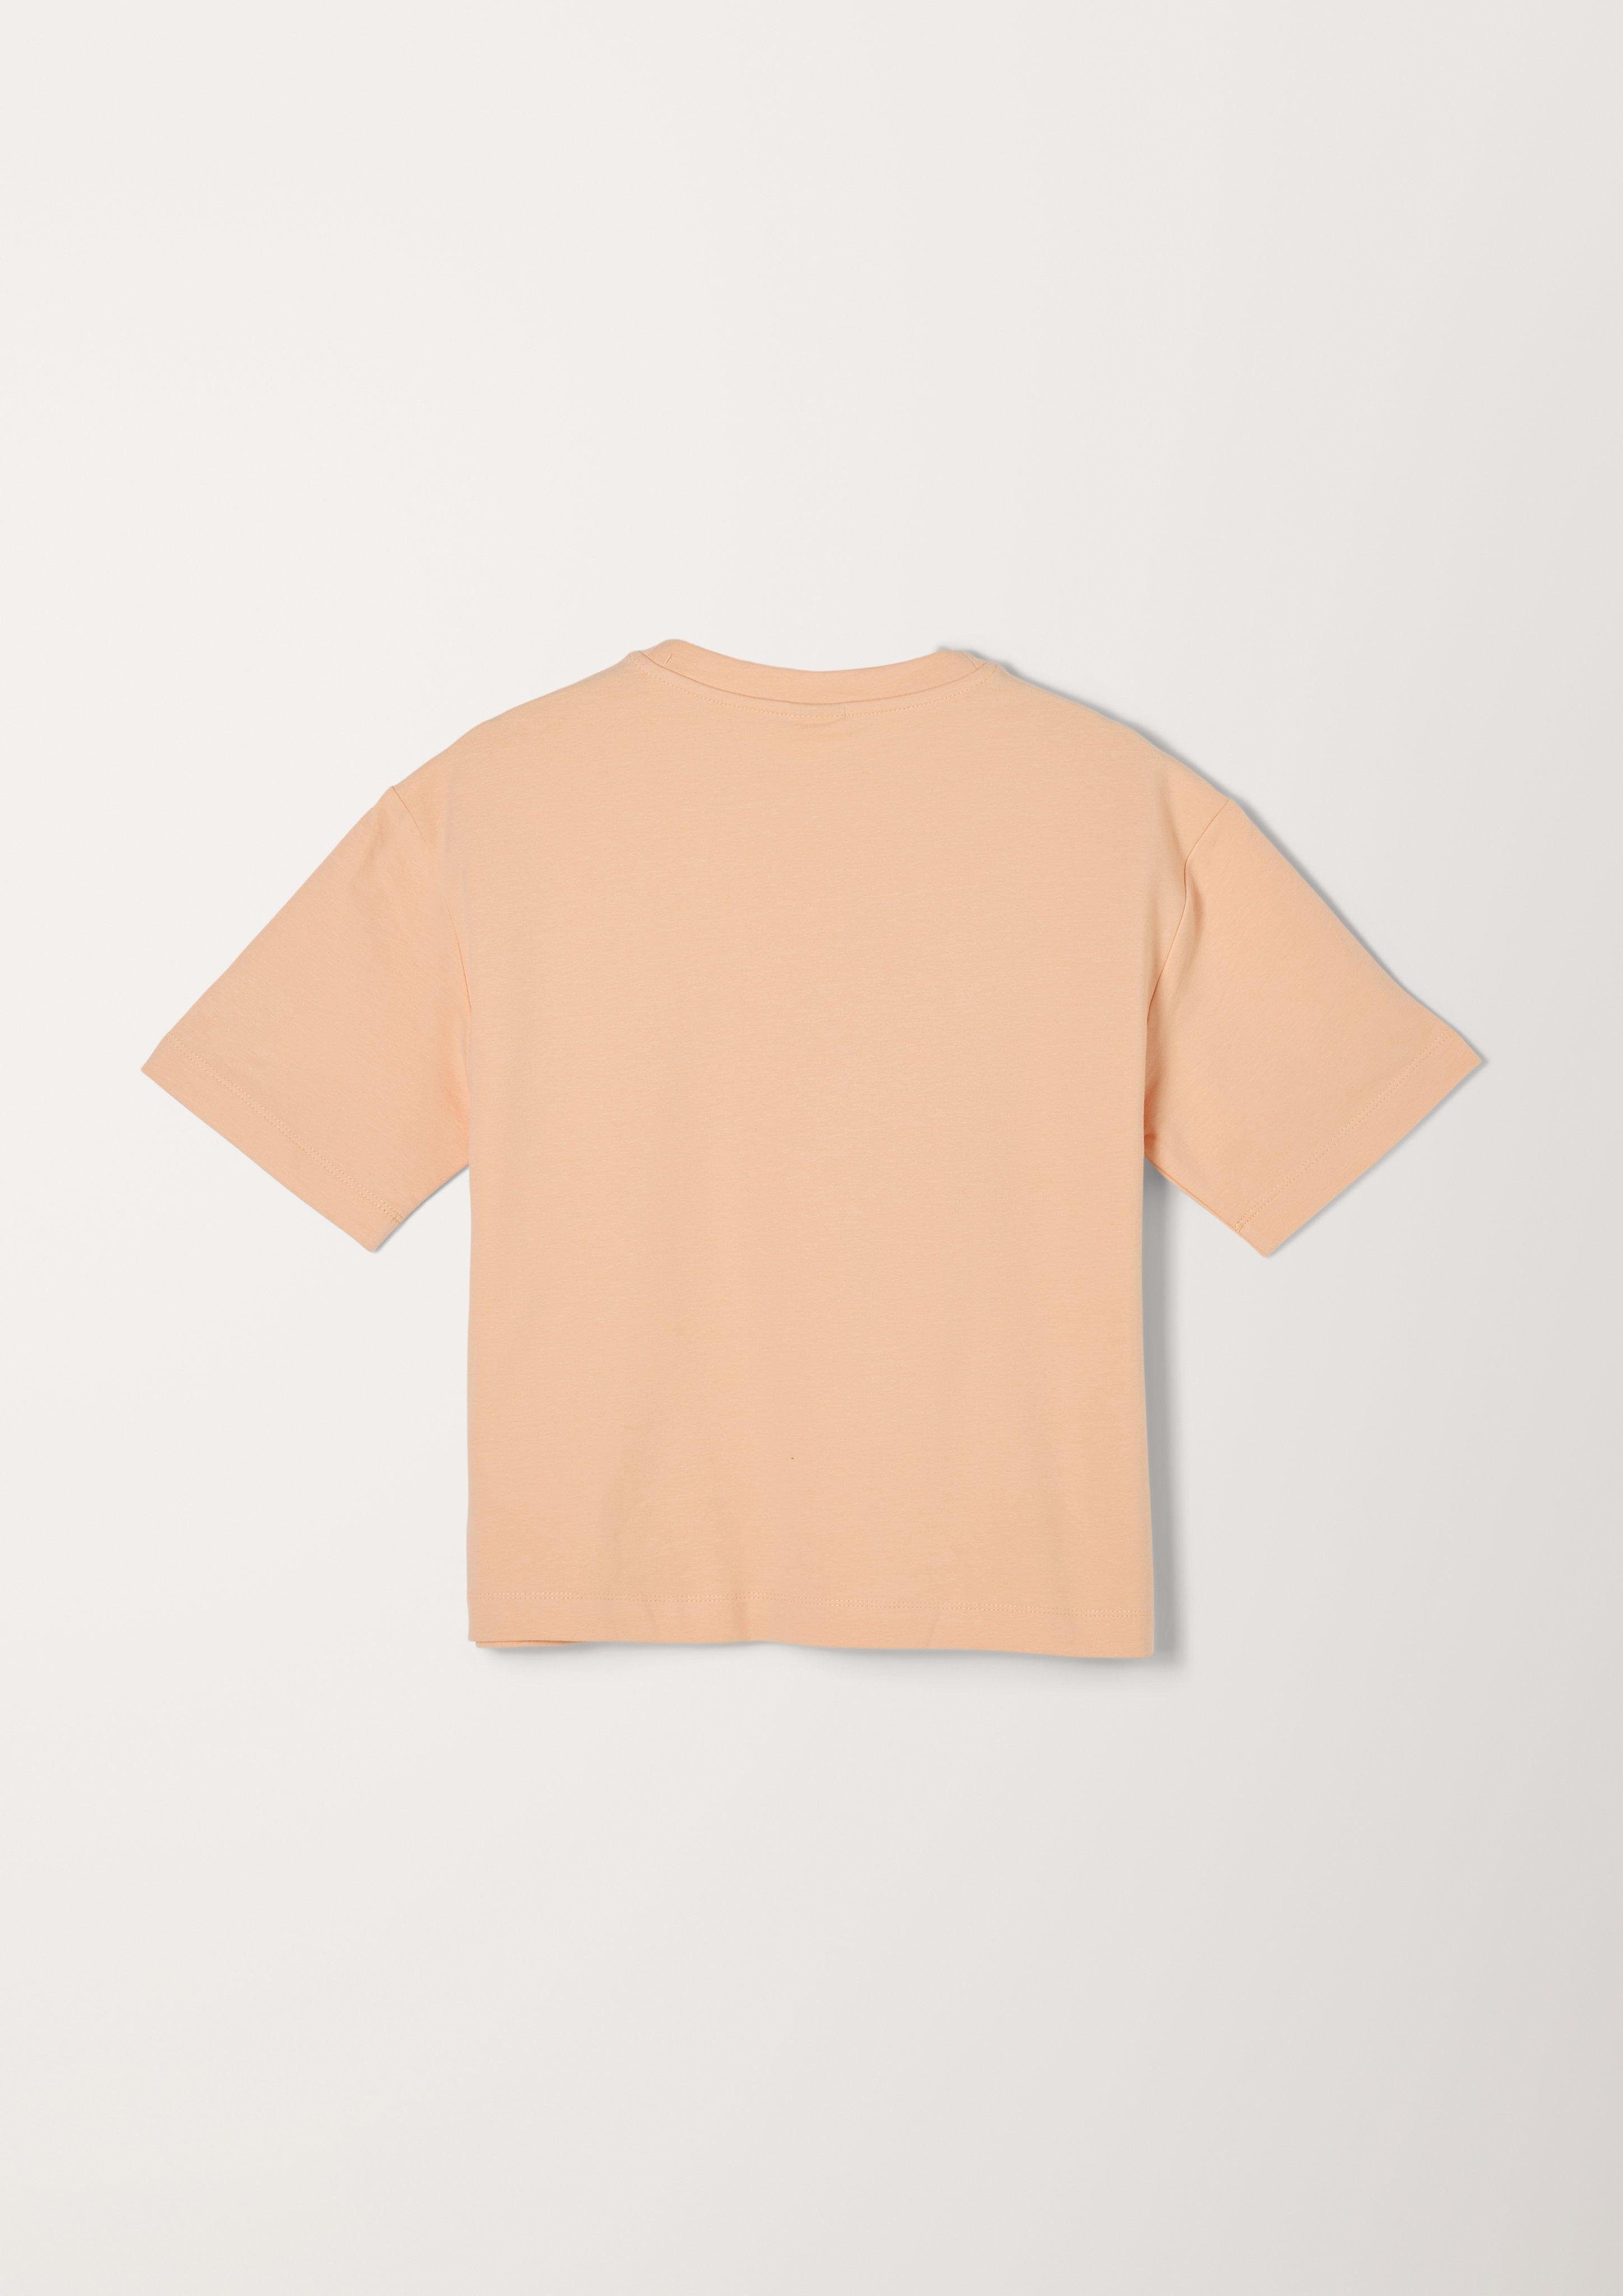 Statementprint mit peach T-Shirt Kurzarmshirt s.Oliver